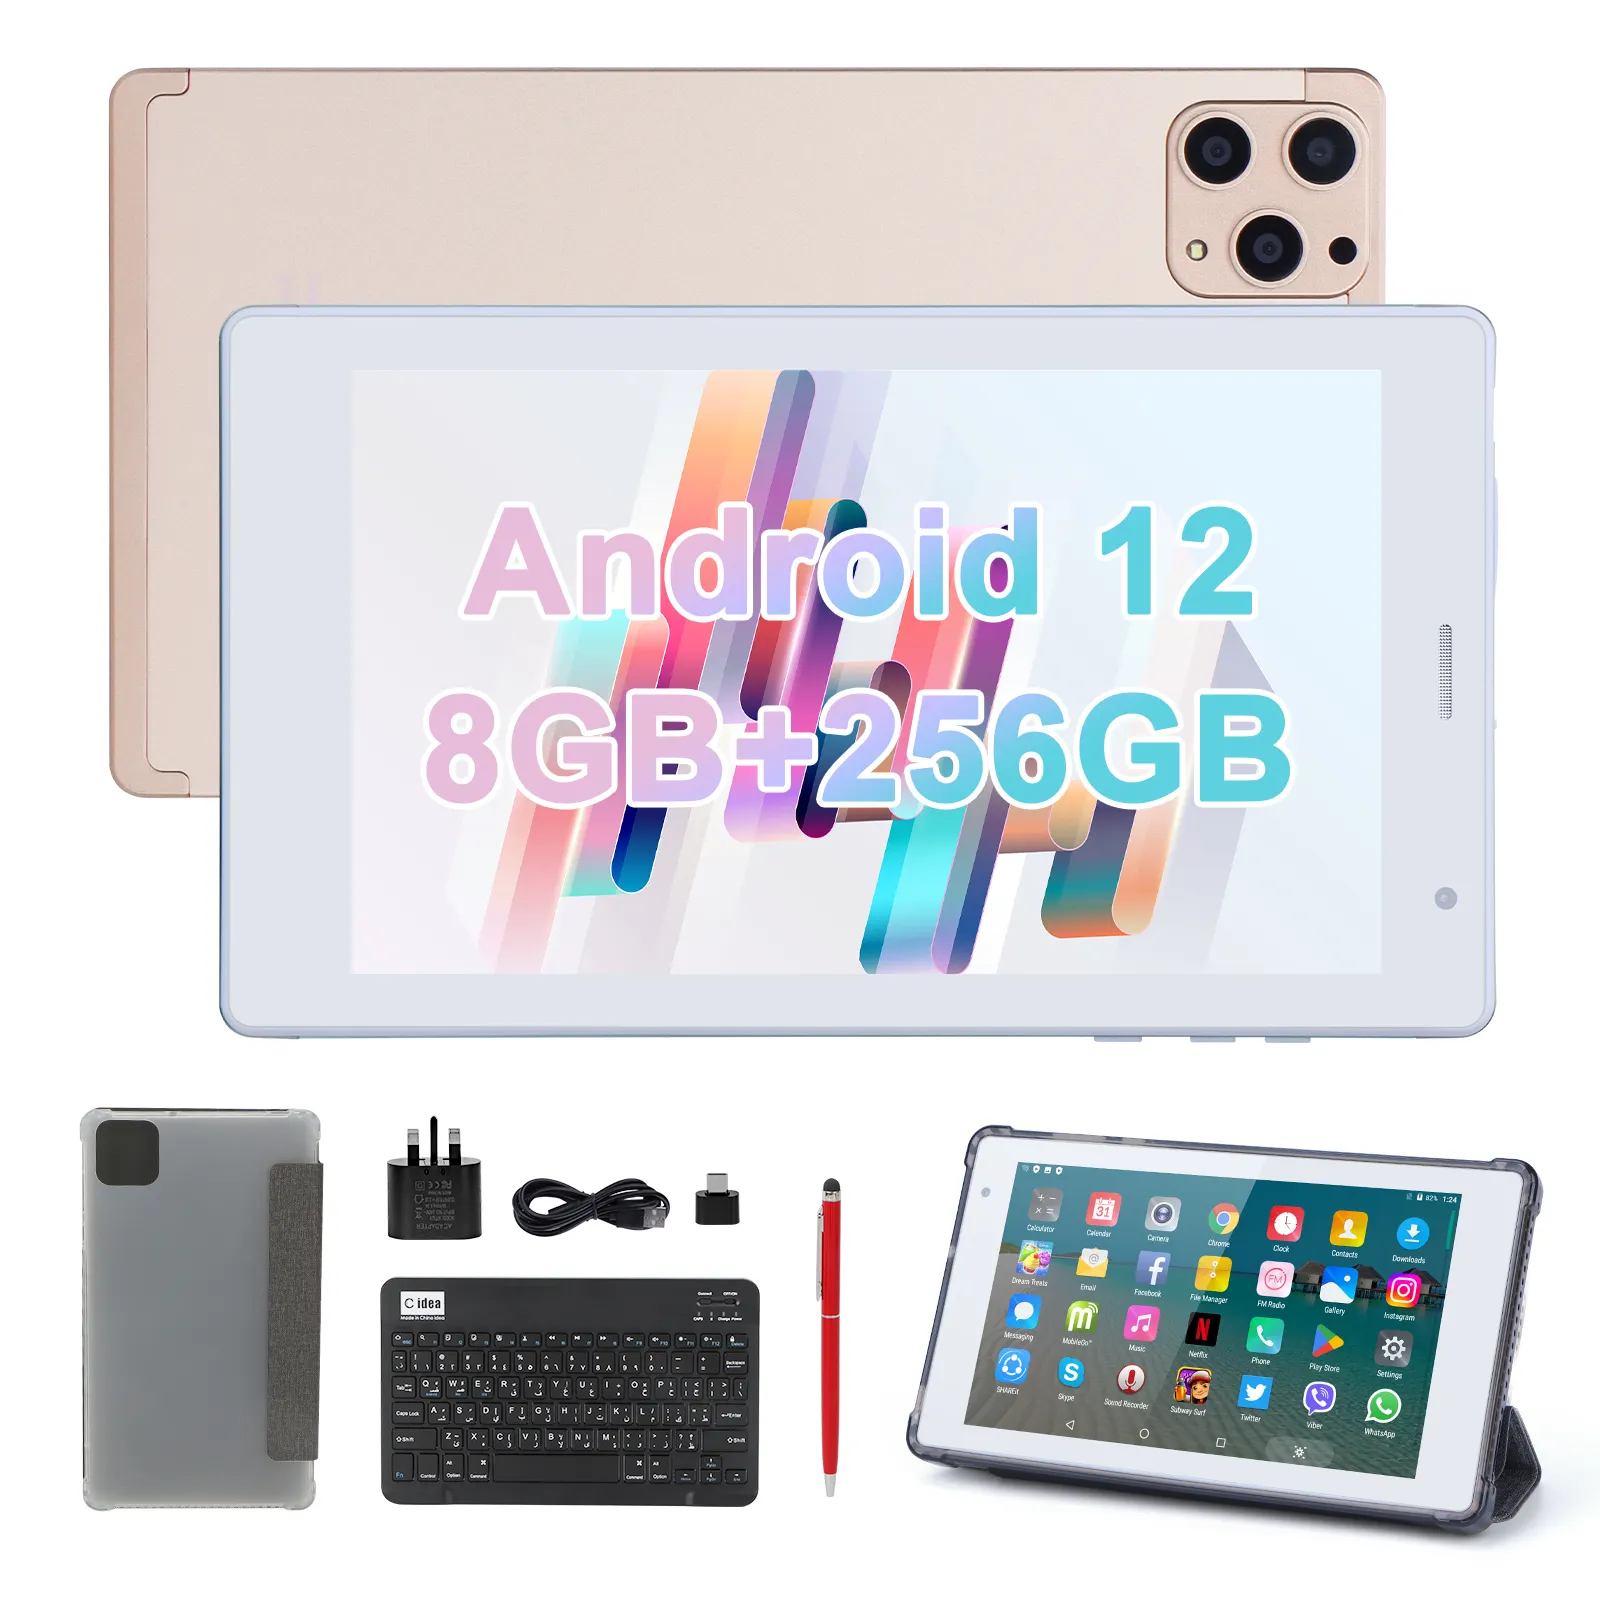 Layar Lcd pembuat Tiongkok 8GB RAM 512GB ROM Quad Core 8000mAh untuk siswa Tablet Android 12 dewasa merah muda